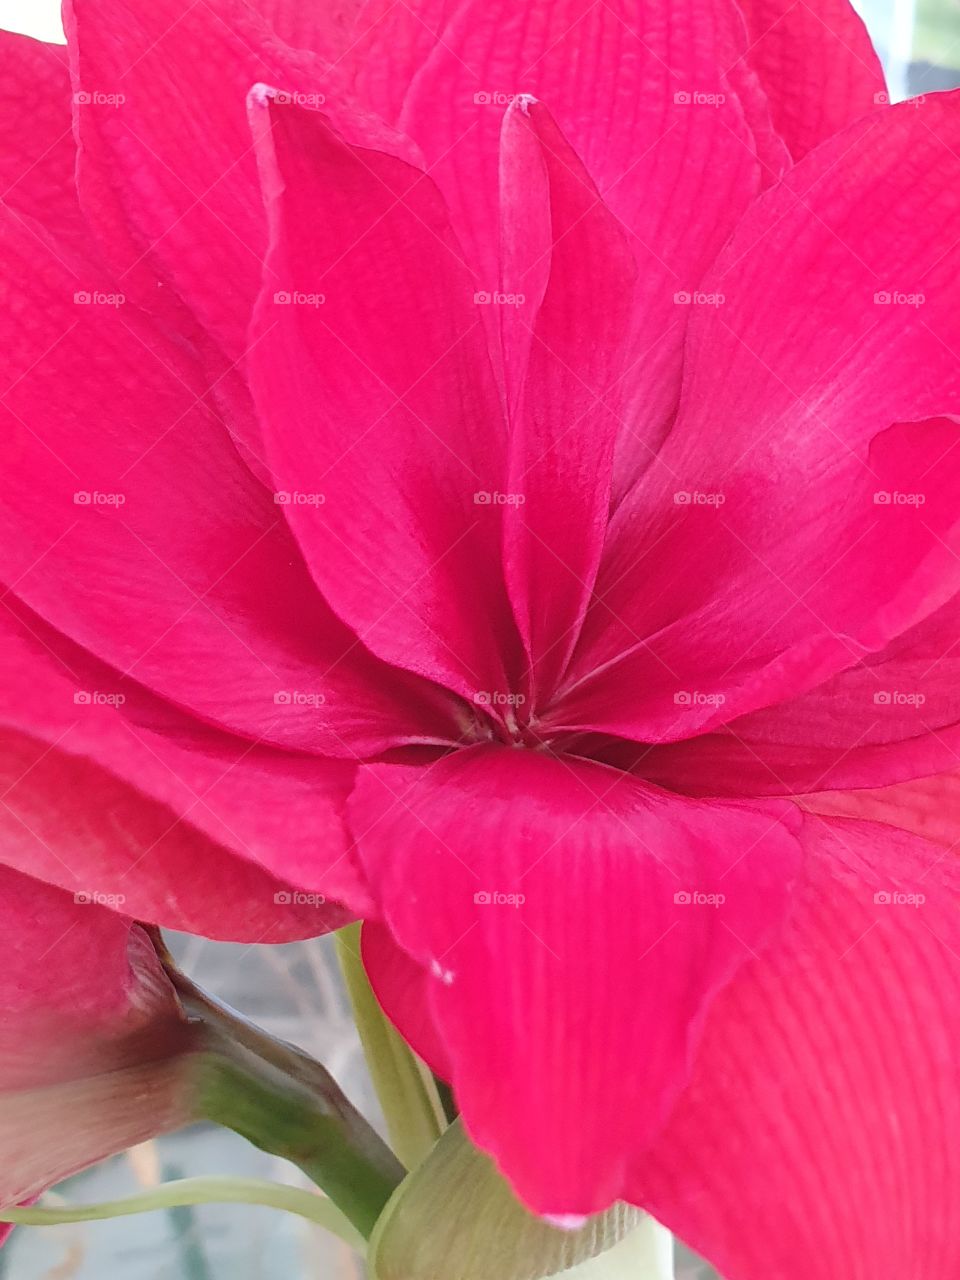 amaryllis flower closeup and a bud